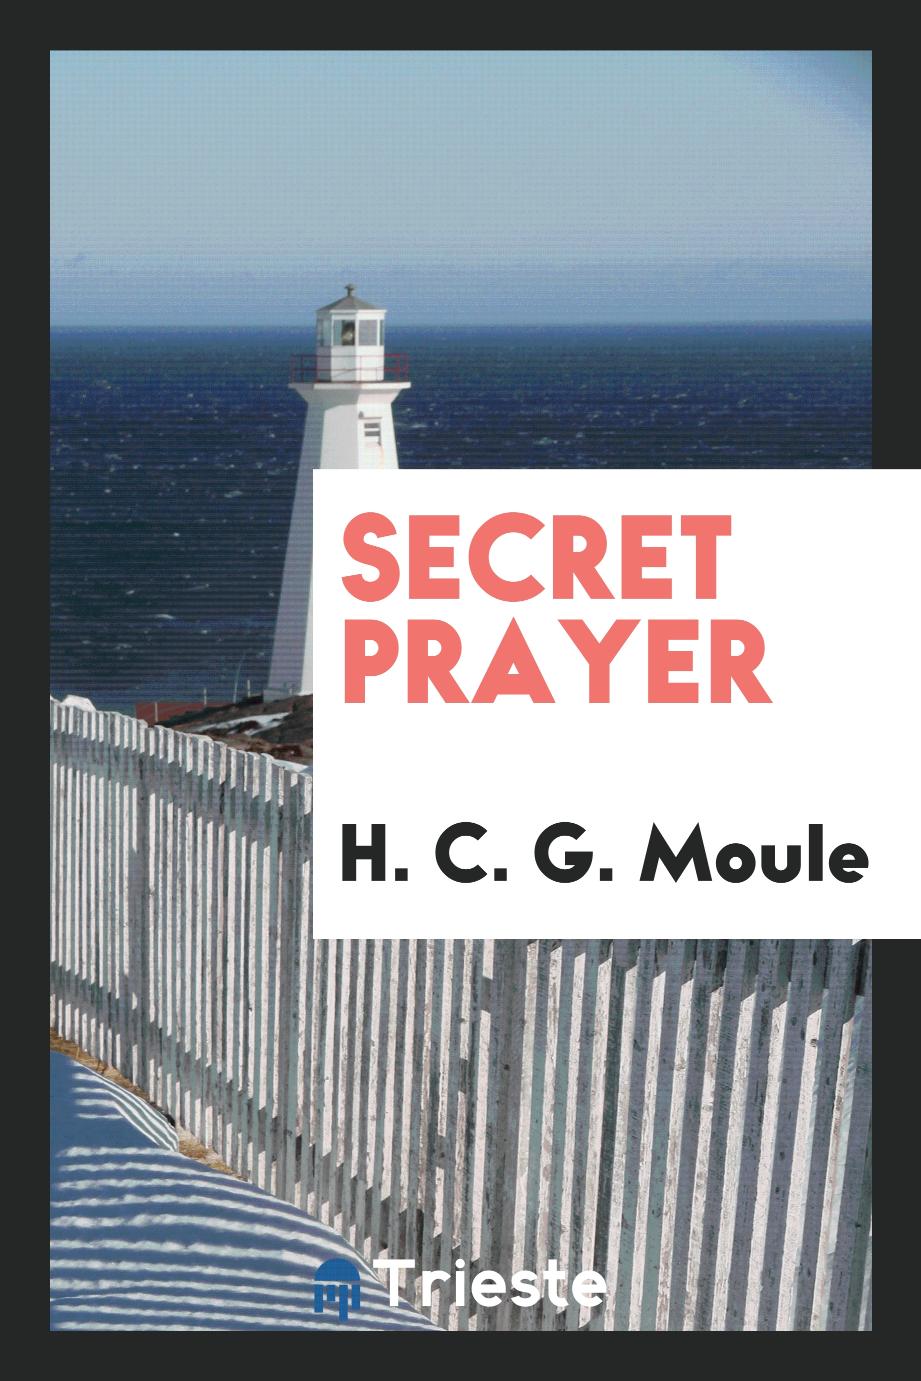 Secret prayer